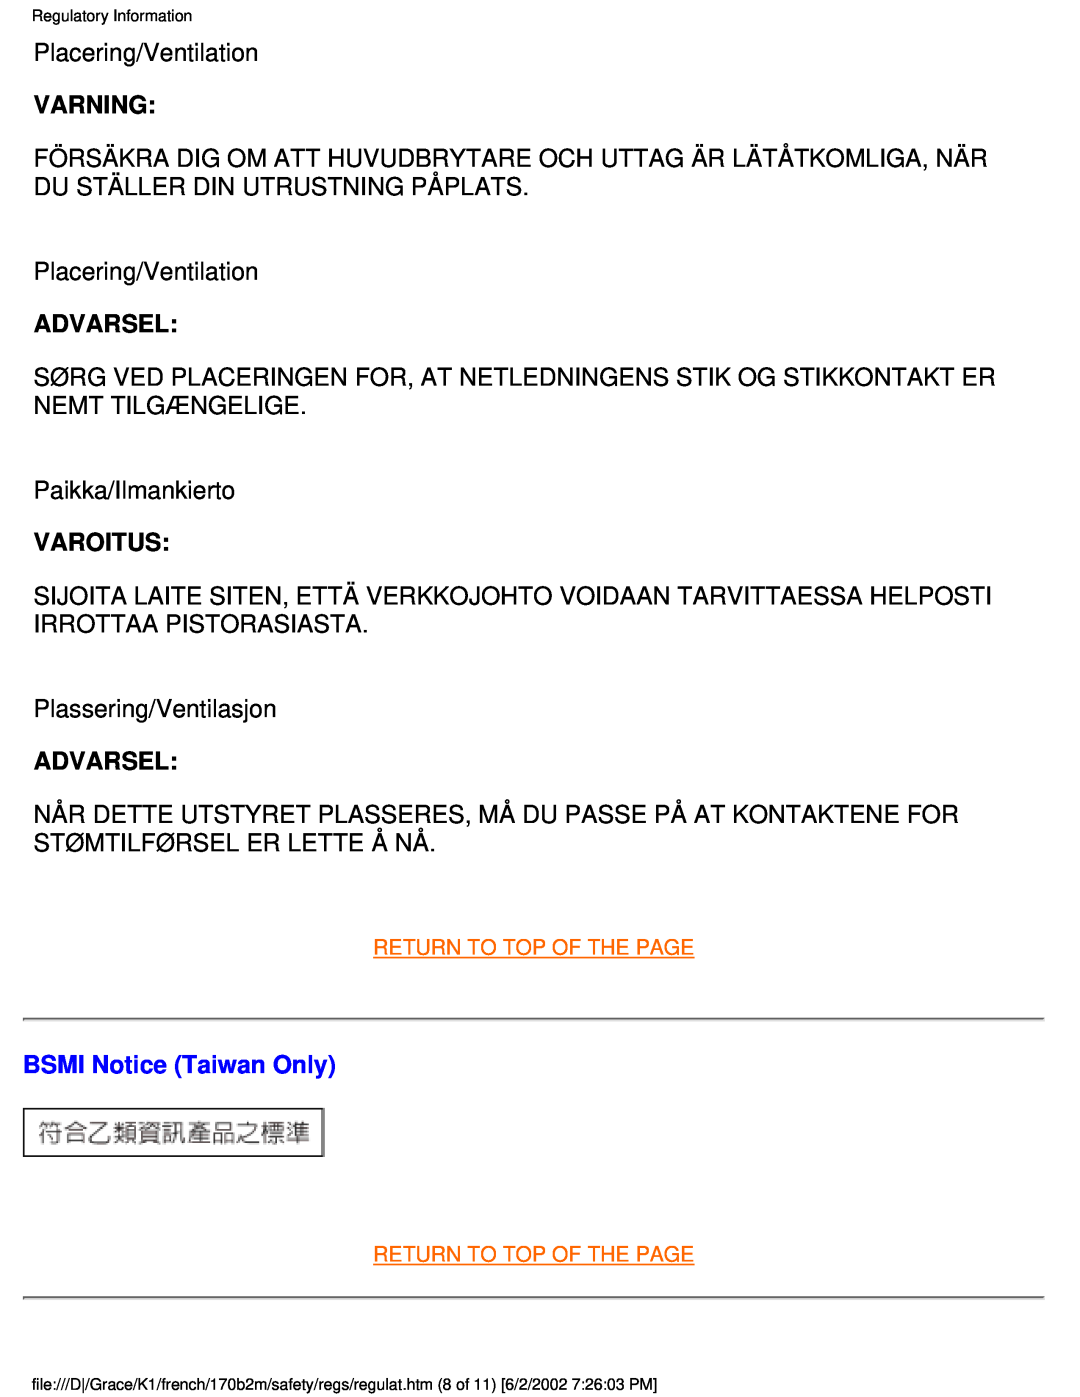 Philips 170B2M user manual Varning, Advarsel, Varoitus, BSMI Notice Taiwan Only 